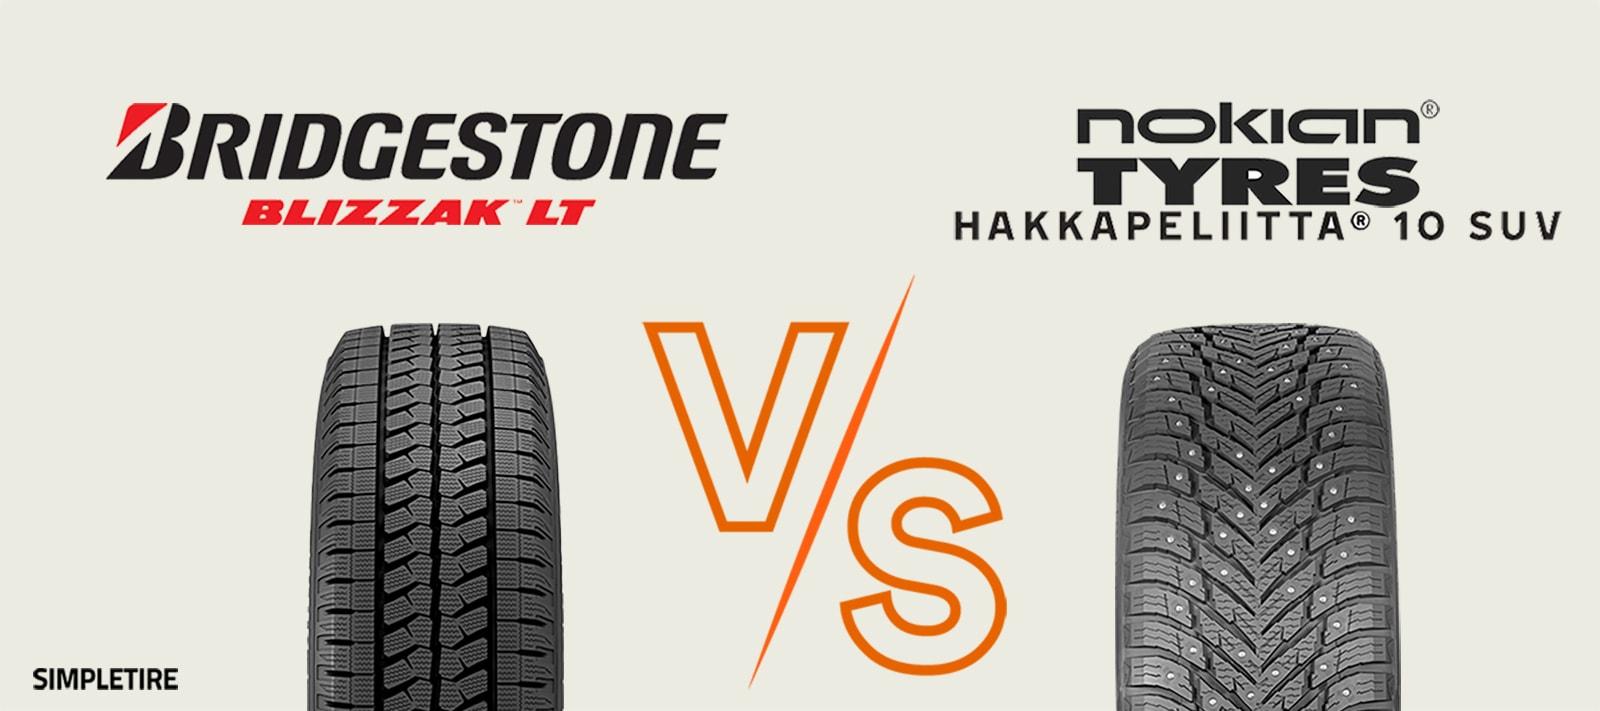 Bridgestone Blizzak LT vs Nokian Hakkapeliitta 10 SUV tires